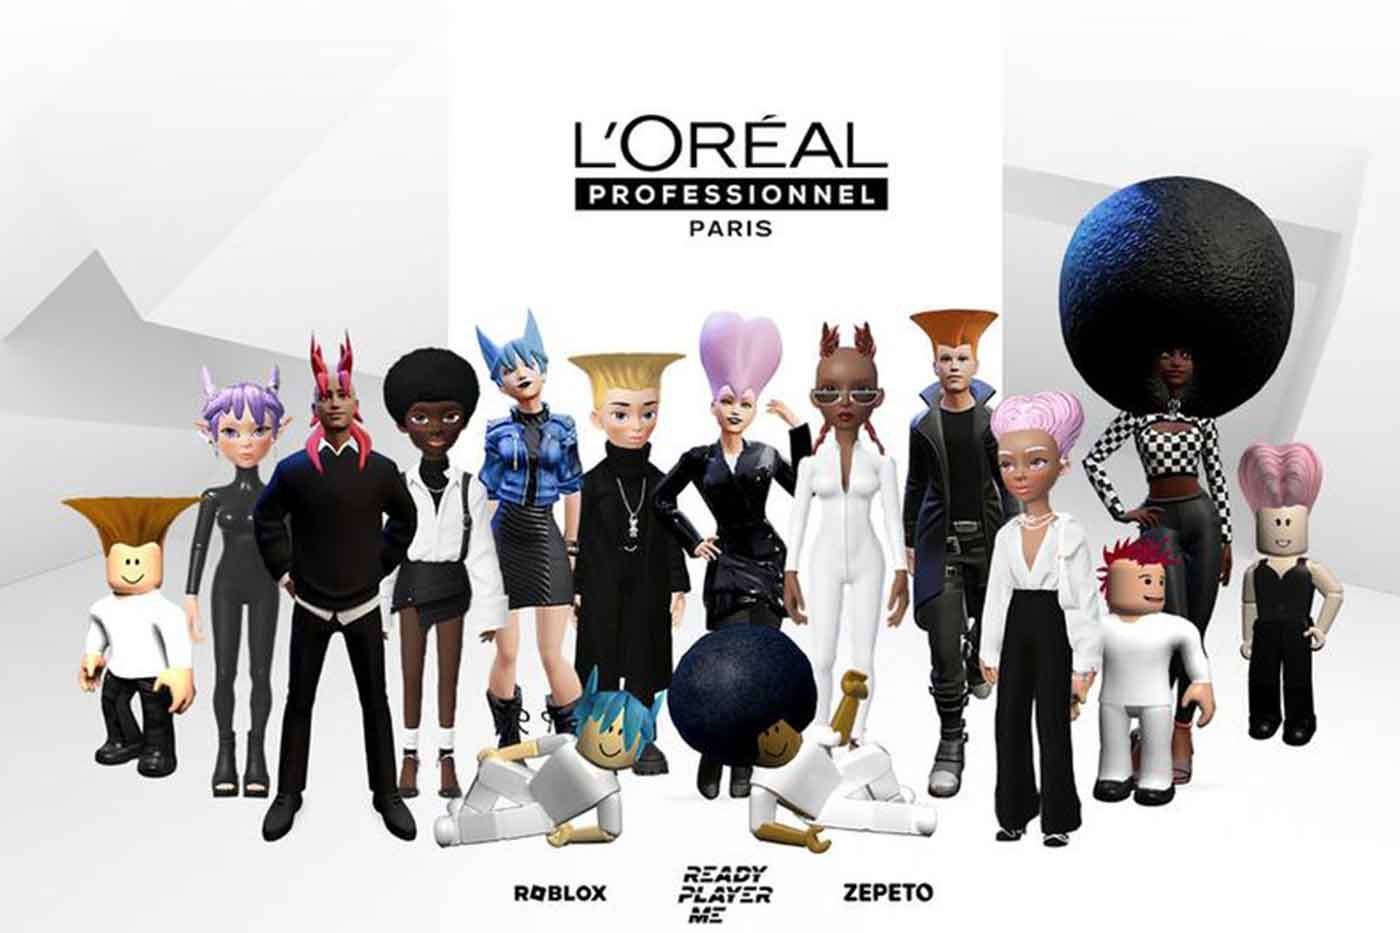 L’Oréal Professionnel launches hairstyles through metaverse platforms